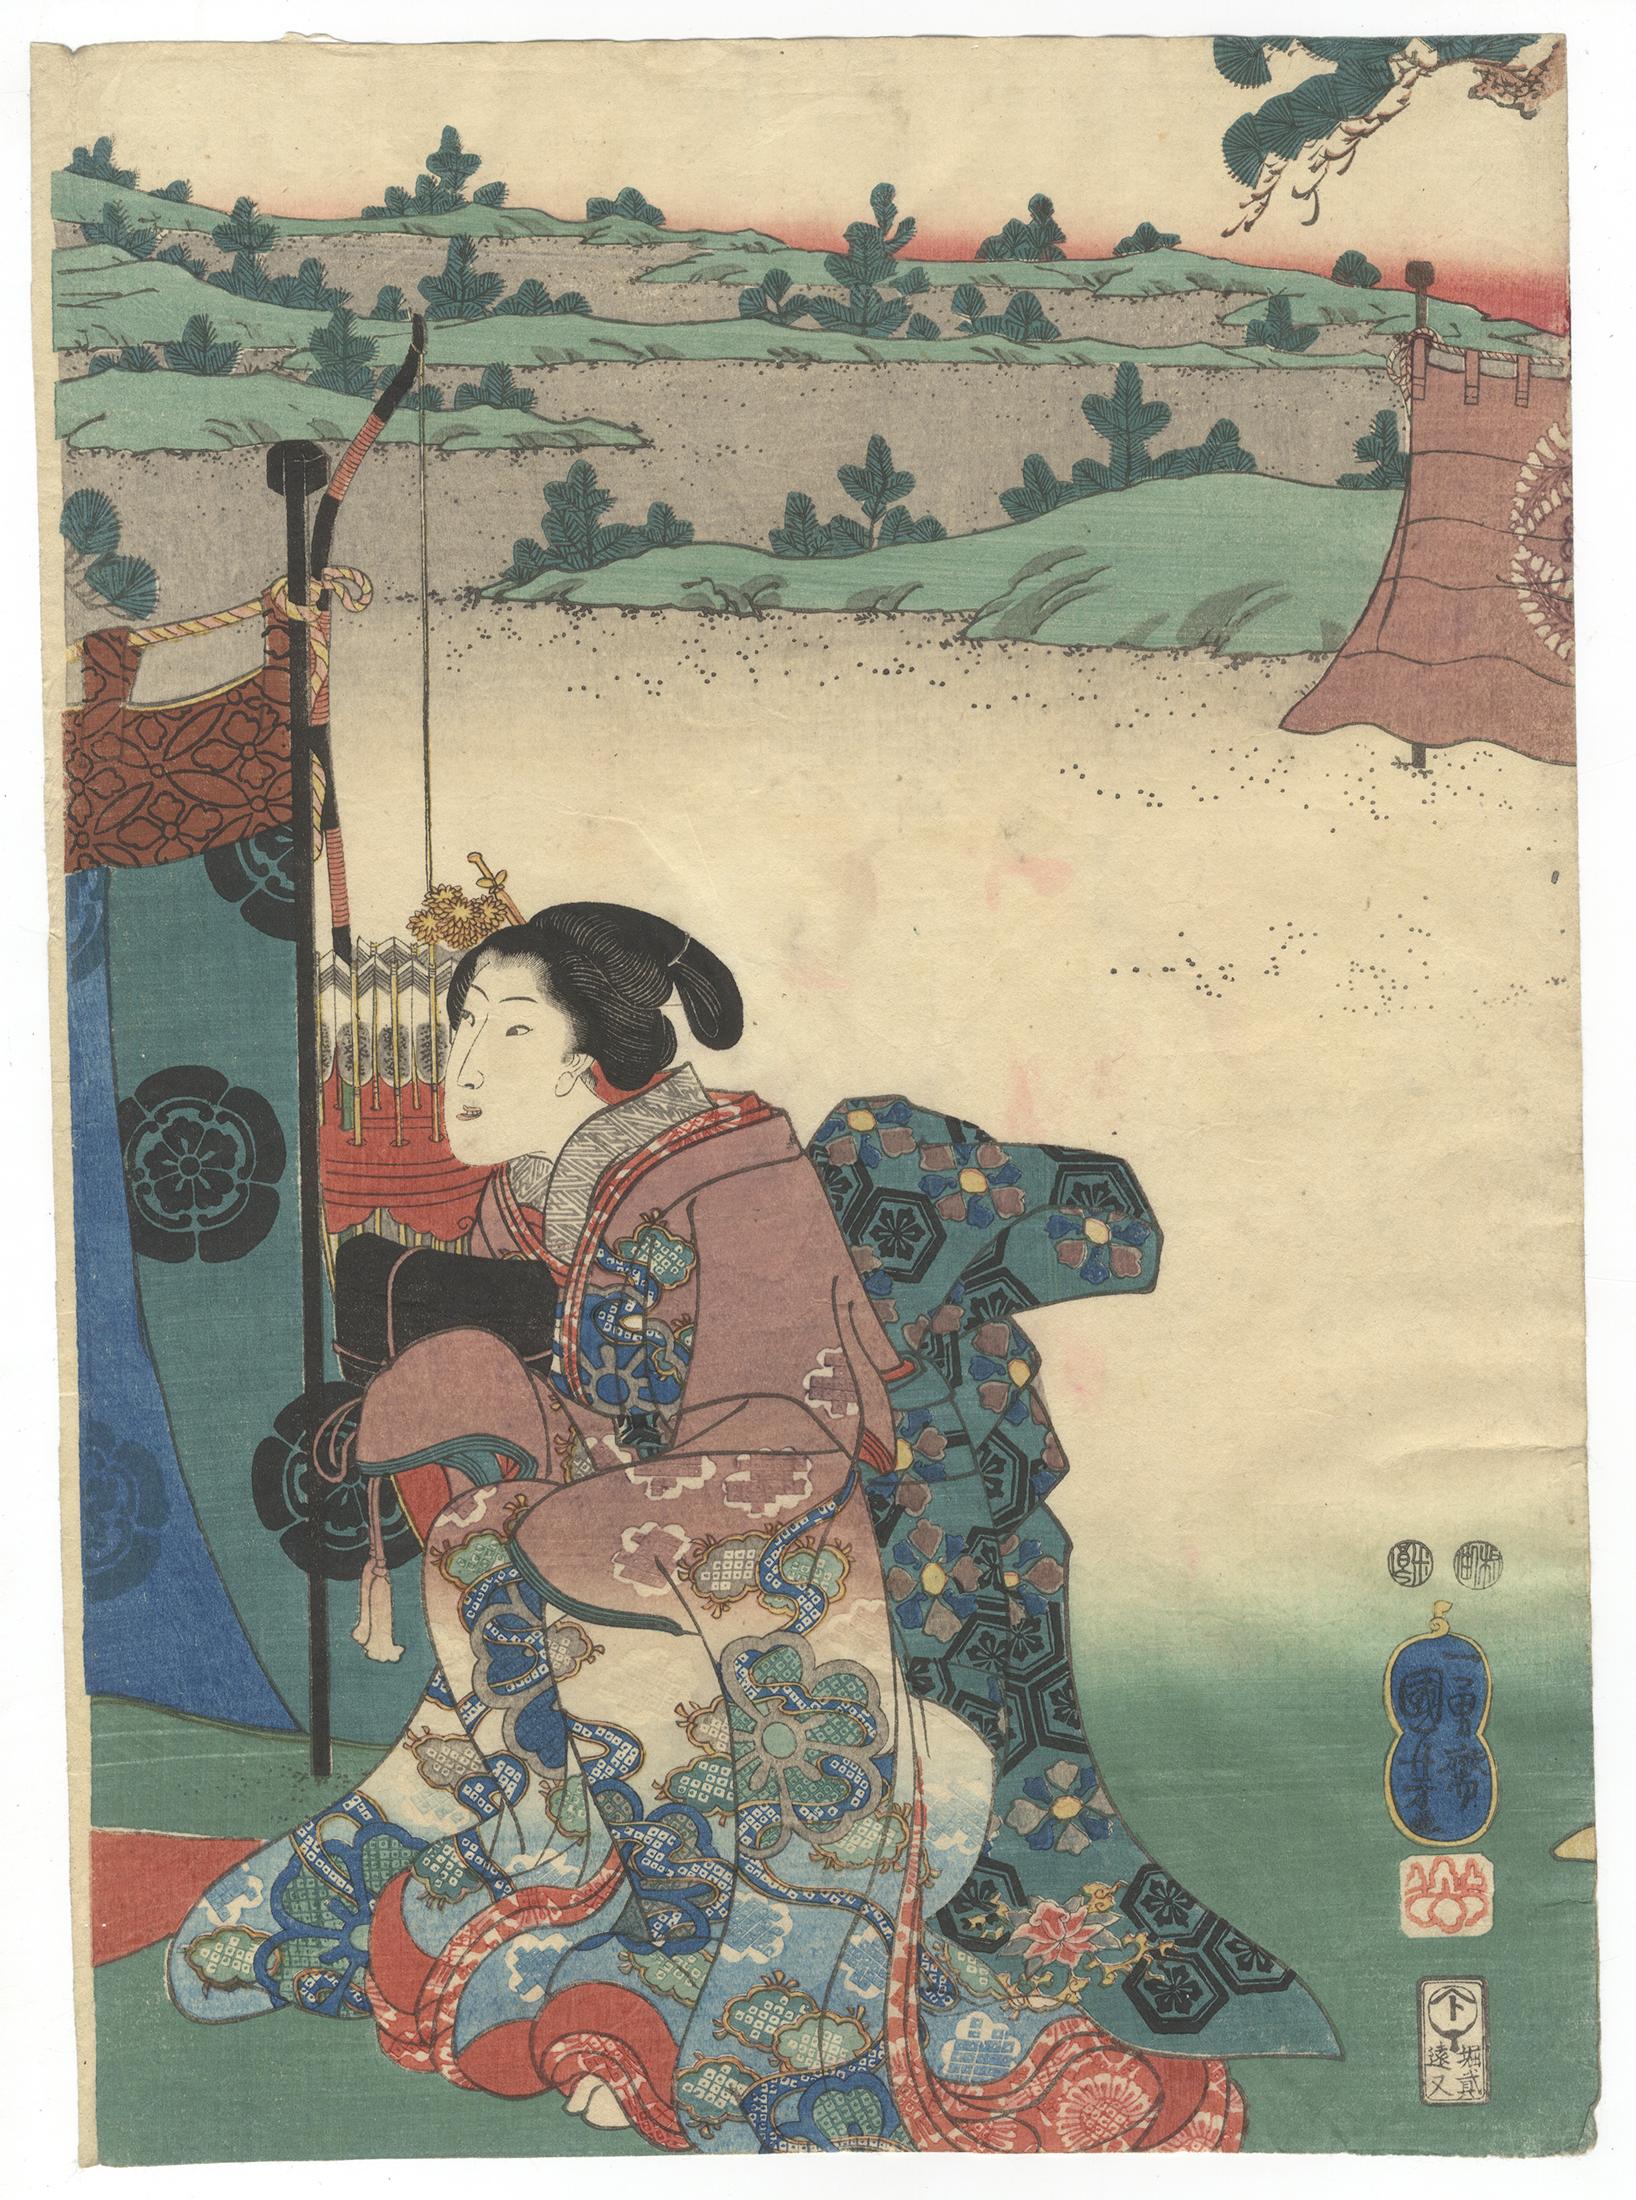 Artists: Kuniyoshi Utagawa (1798-1861)
Title: Archery Practice from the Tales of Genji
Publisher: Enshuya Matabei
Date: 1847-1852
Dimensions: (L) 25.3 x 35 (C) 25.3 x 34.9 (R) 25.2 x 34.9 cm

Enjoying the warmer clime of Japan's summer months,